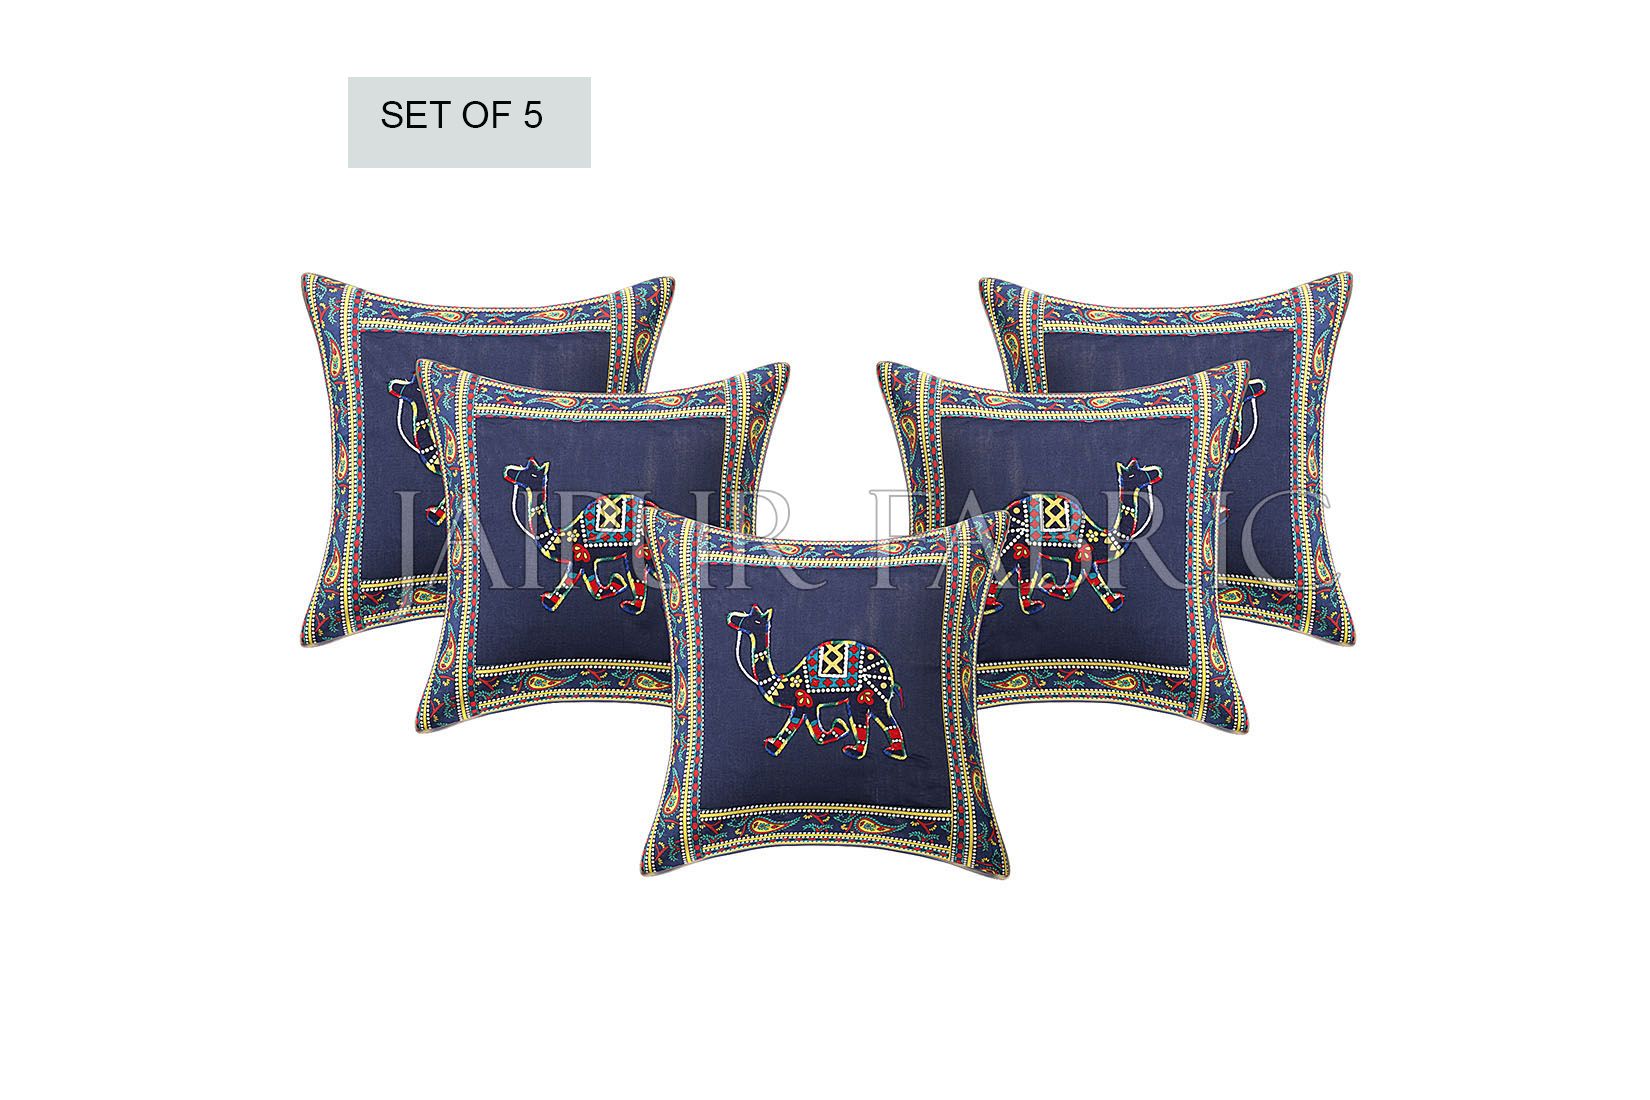 Blue Camel Design Patchwork & Applique Cushion Cover